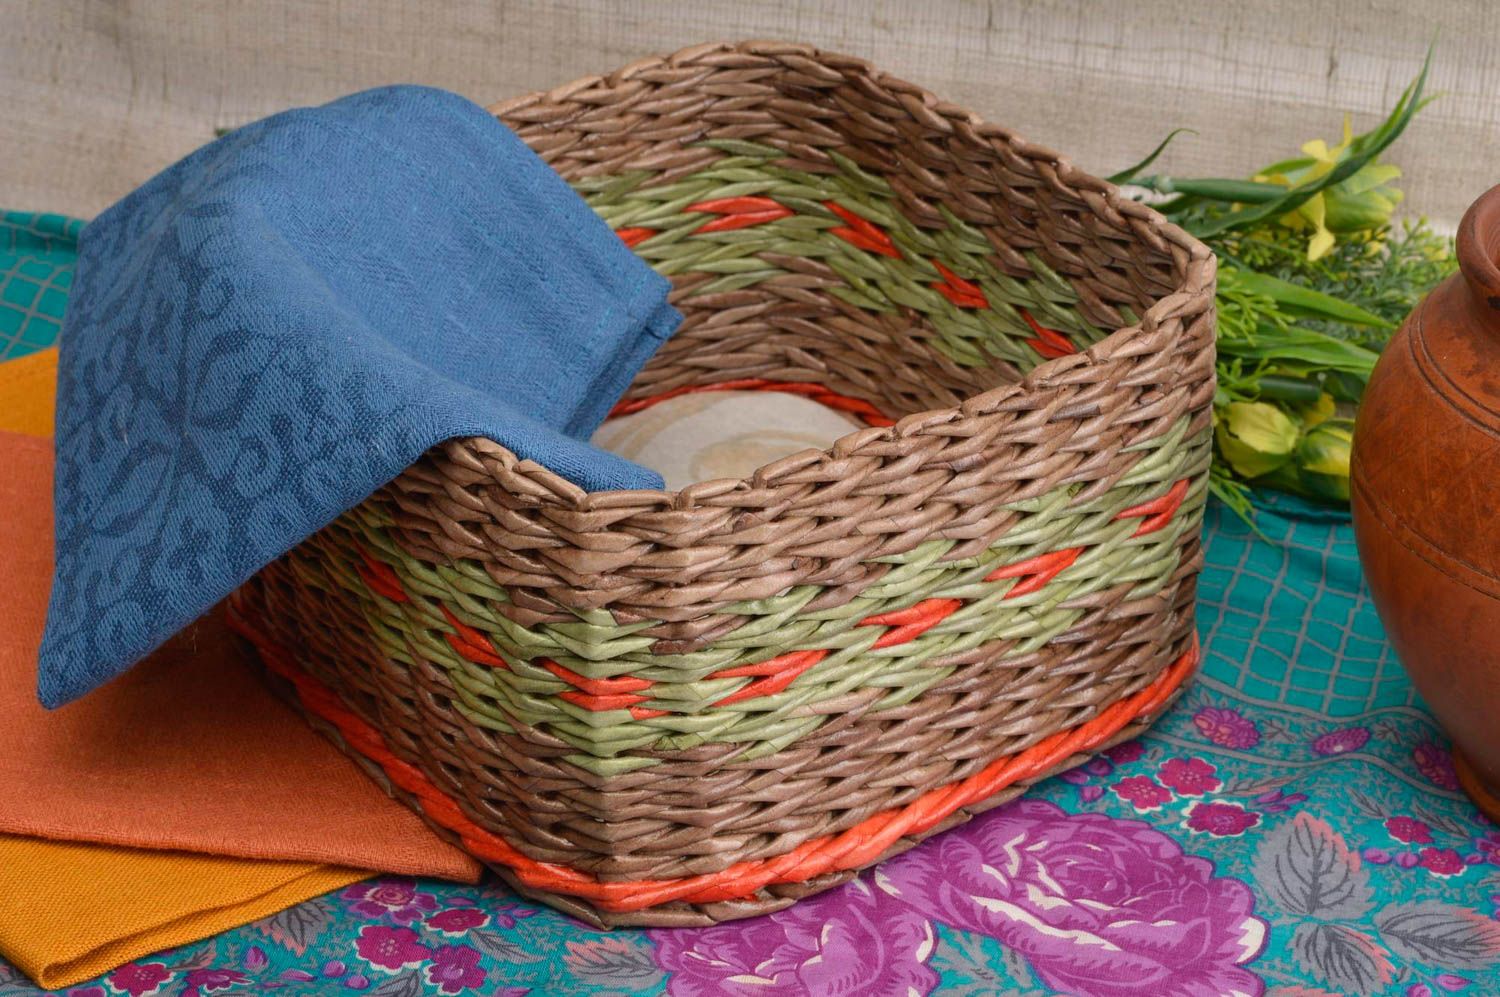 Handmade wicker box unusual wicker basket interior decor ideas unusual gift photo 1